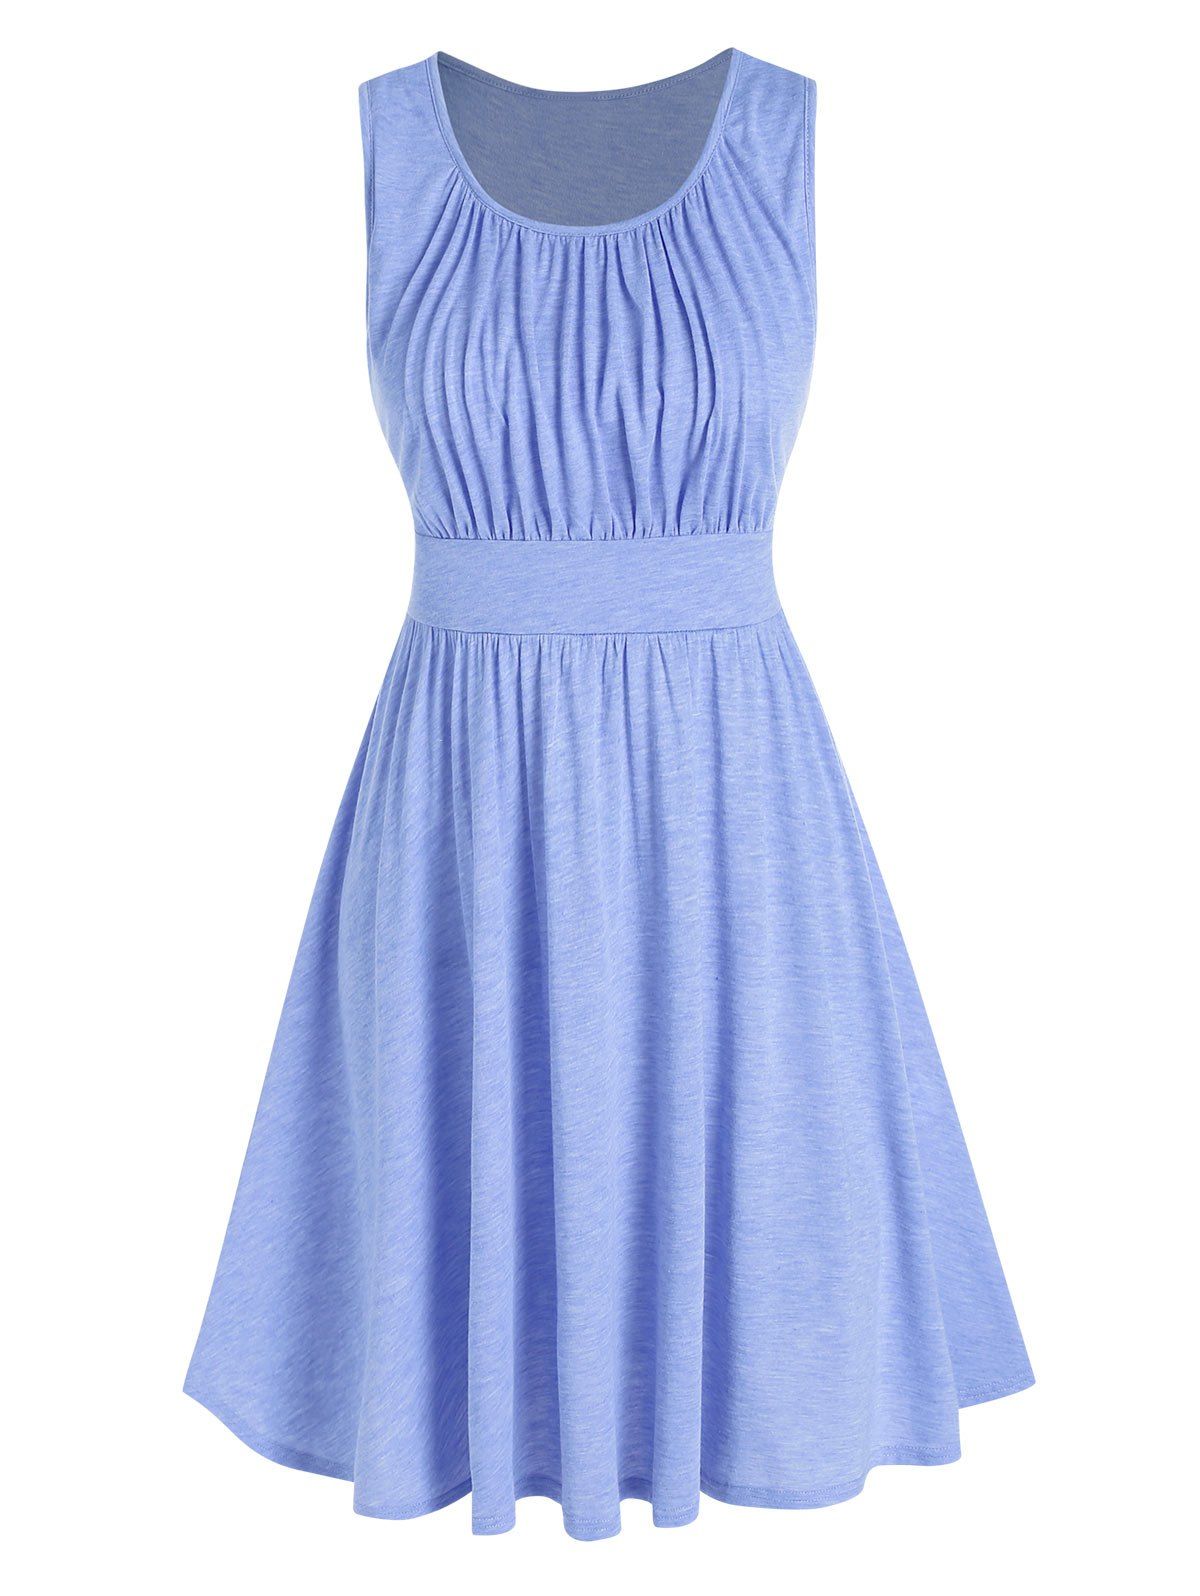 Pleated Sleeveless Flare Dress - LIGHT PURPLE XL